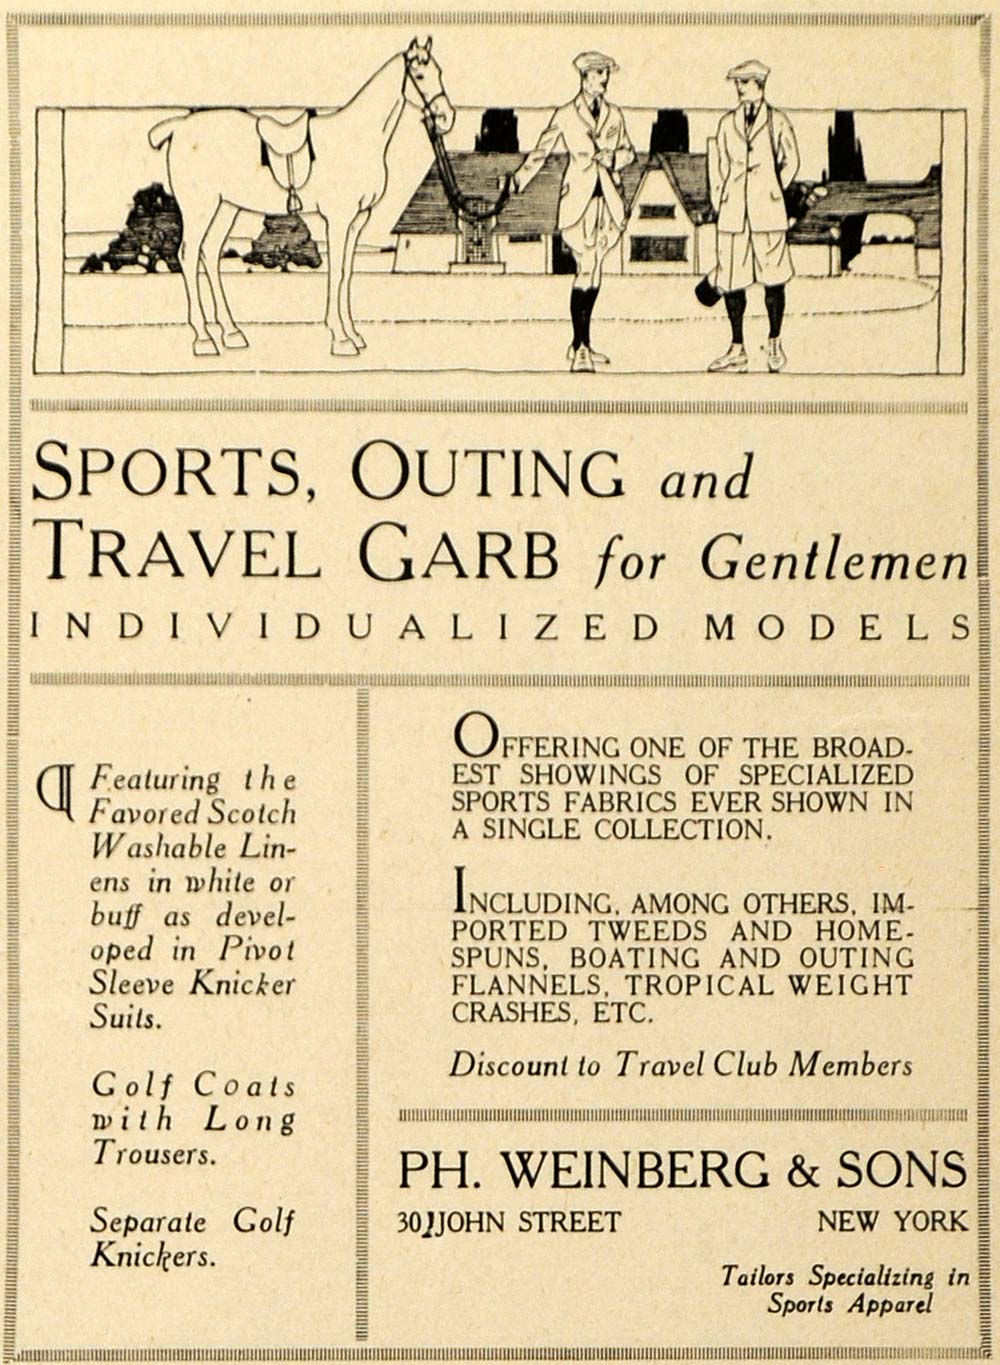 1919 Ad Sports Clothing Outing Travel Garb Model Horse - ORIGINAL TRV1